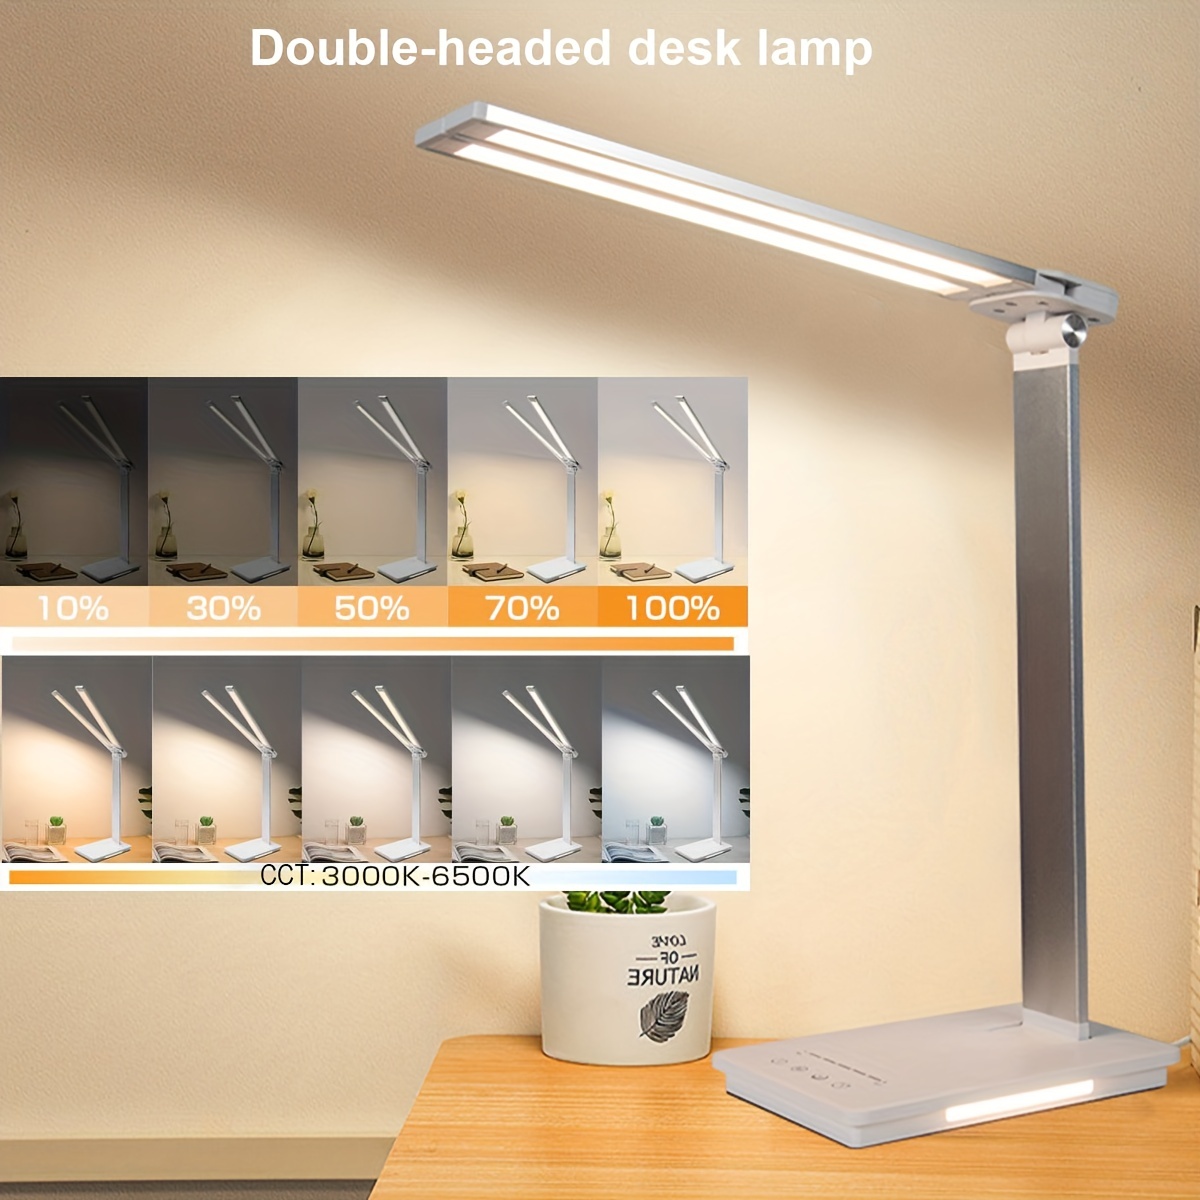 Zealinno Double Head LED Desk Lamp Review & Demo